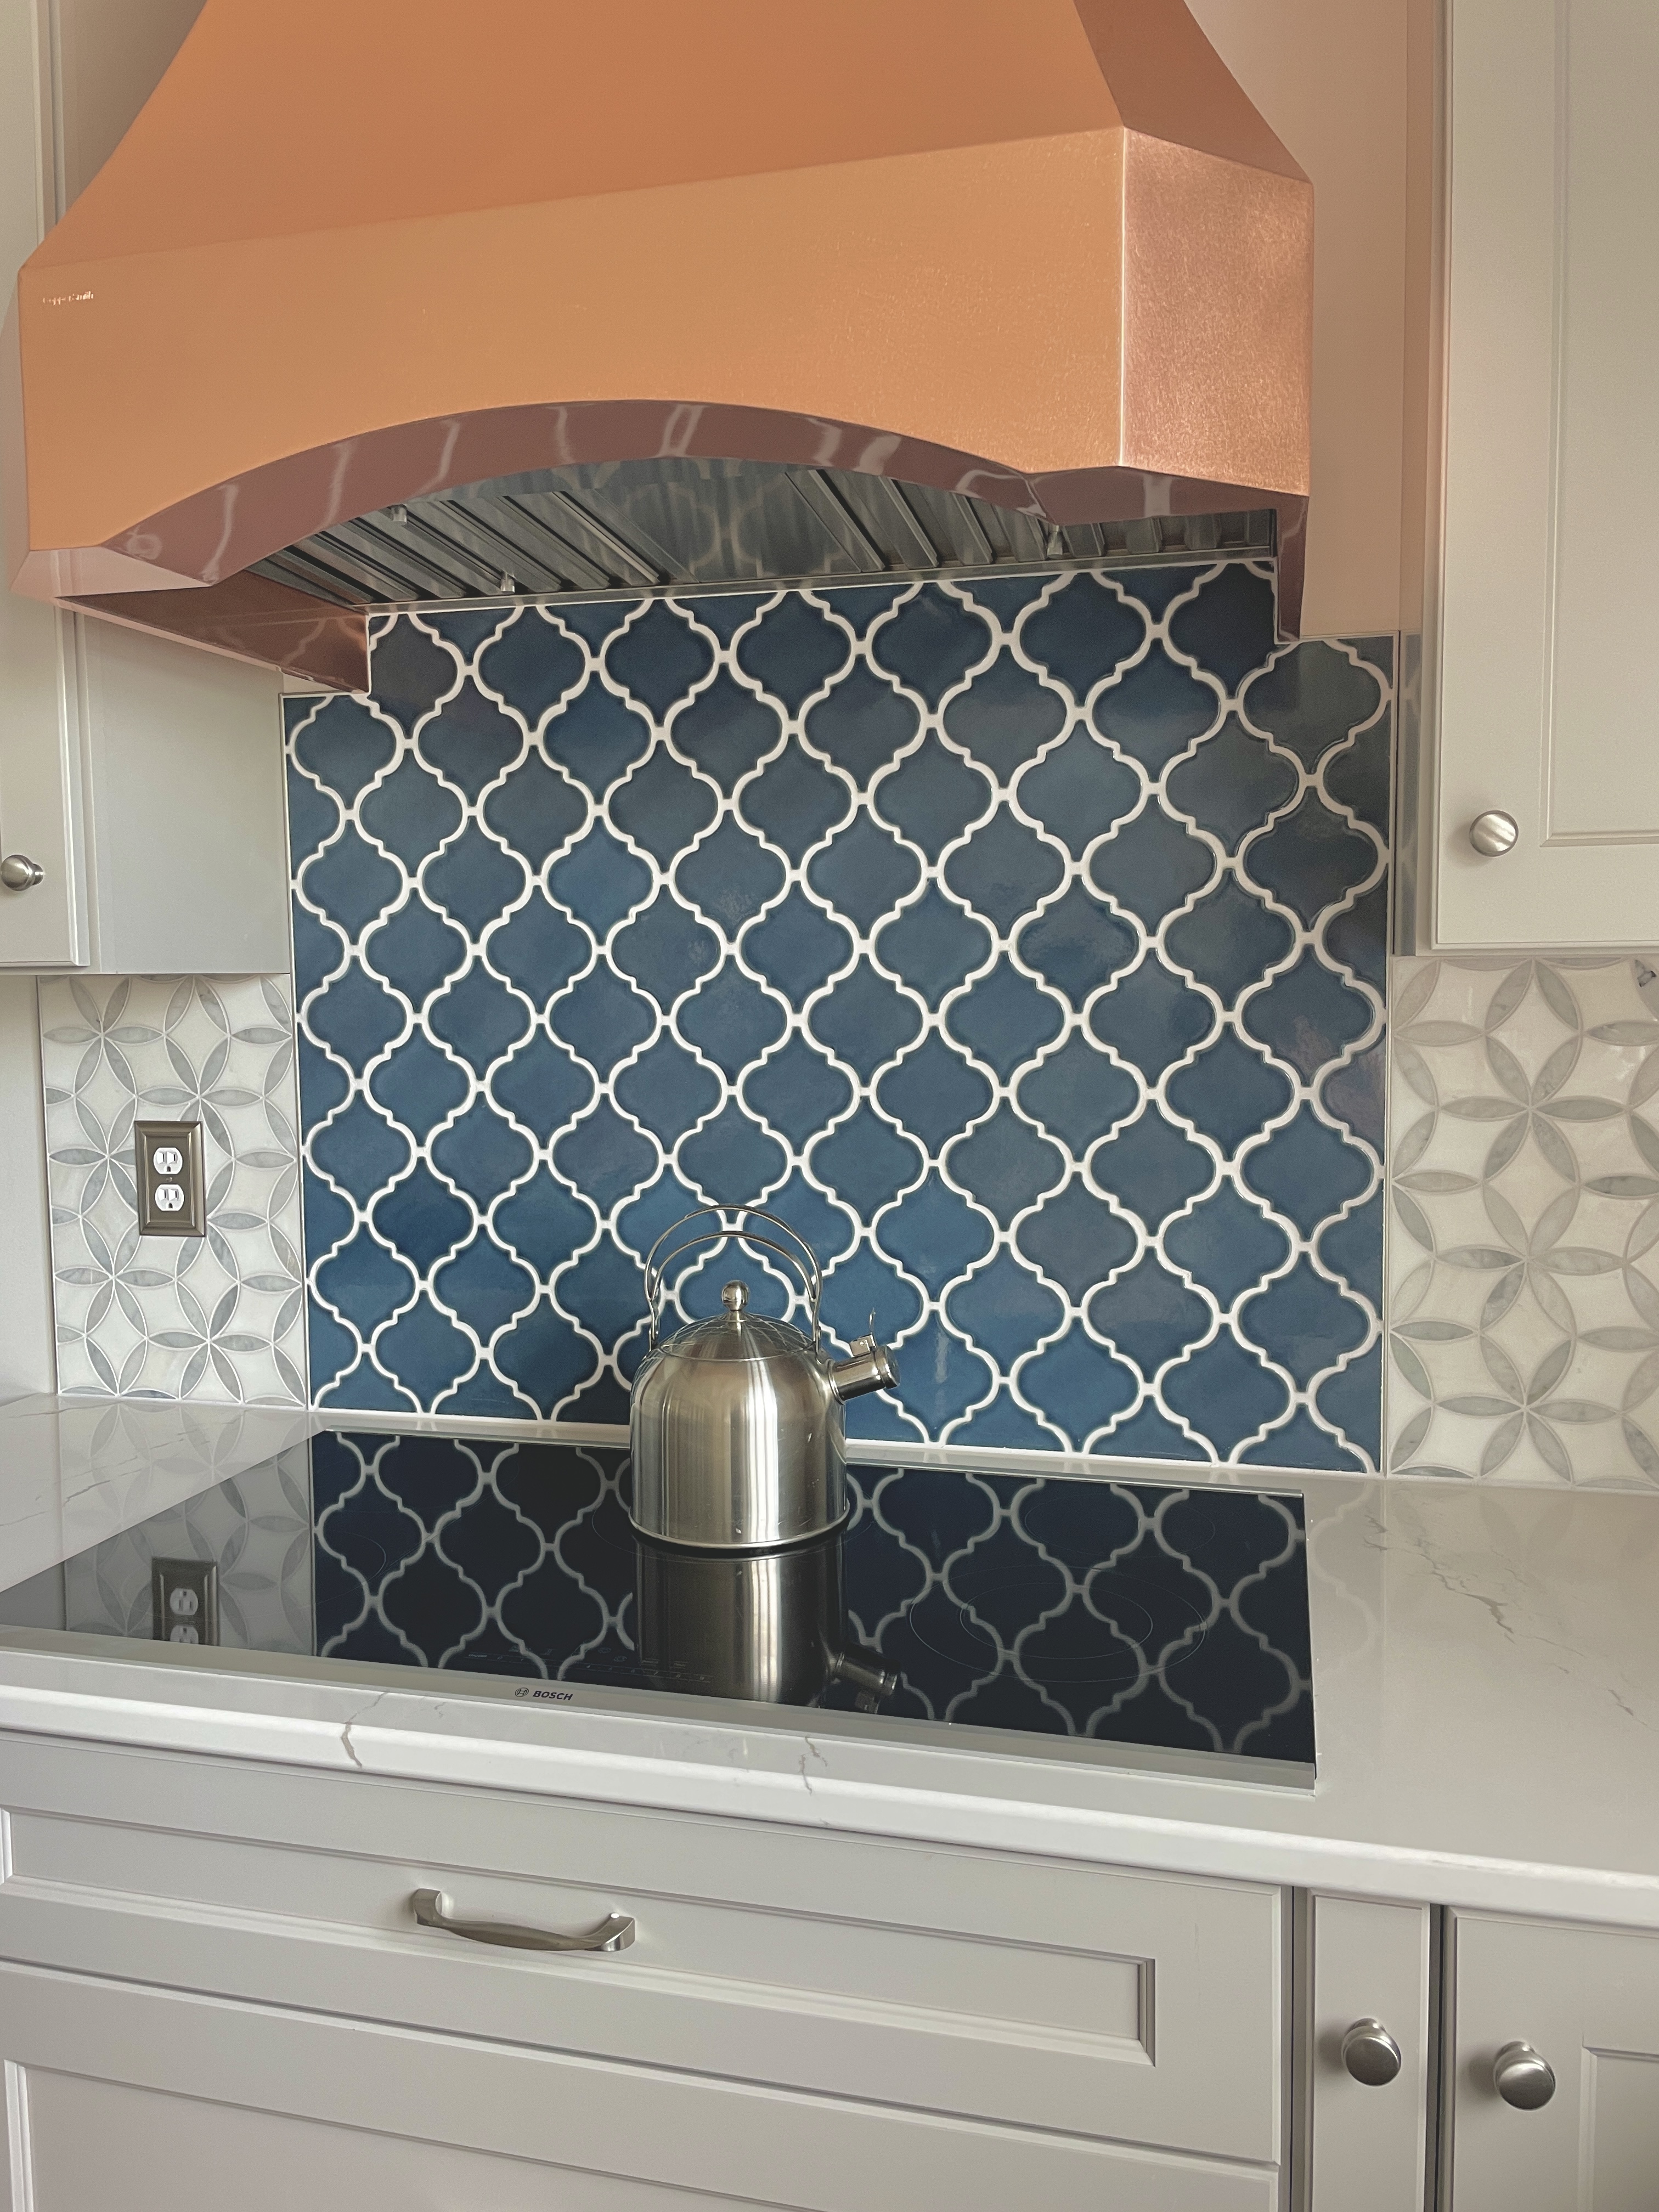 Kitchen design idea, including french-inspired aesthetics, with white kitchen cabinets, white kitchen countertops, and marble backsplash,stylish range hood options